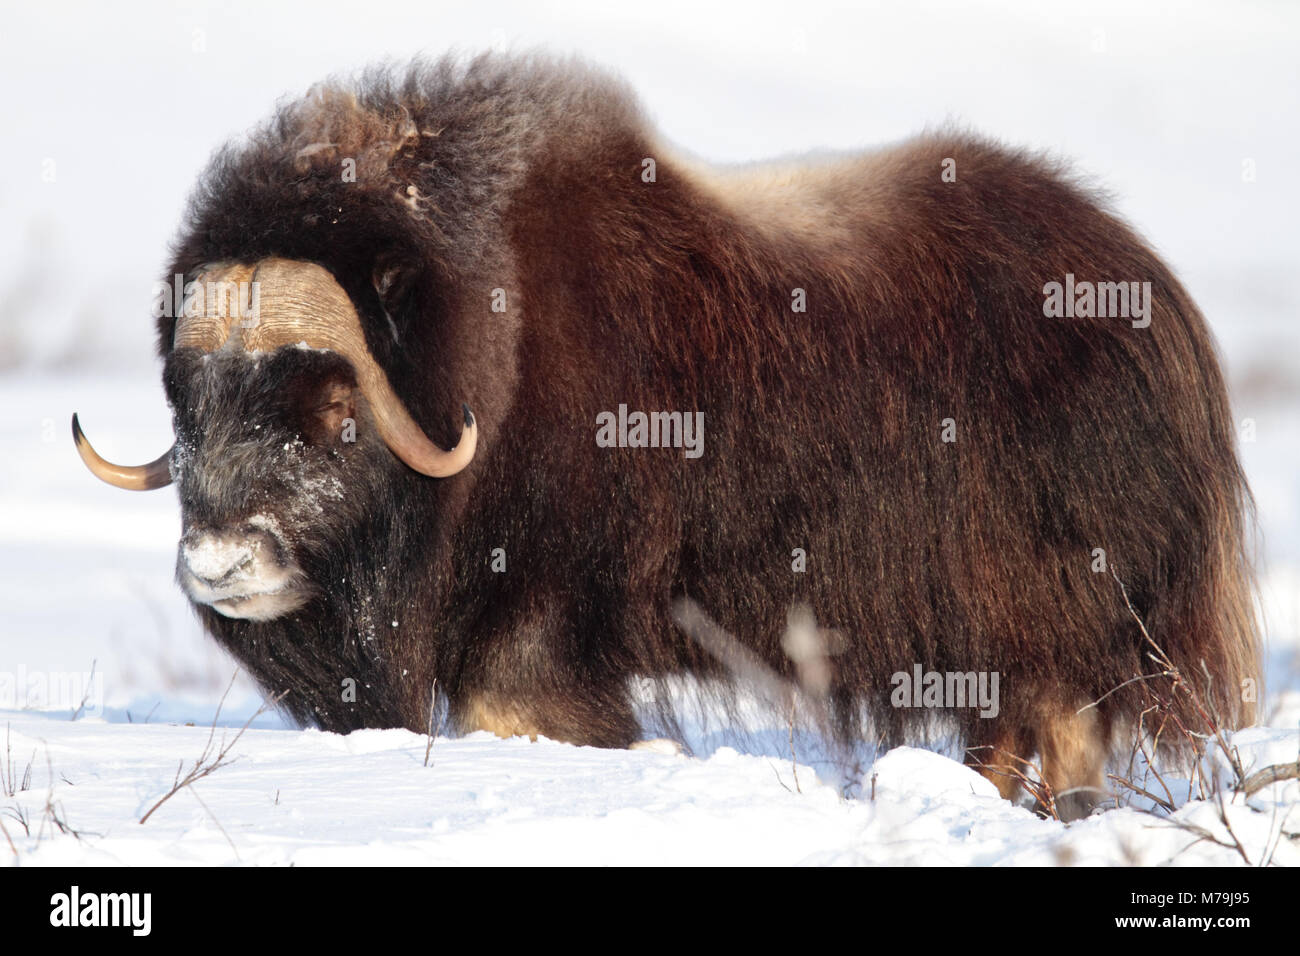 North America, the USA, Alaska, North Alaska, North Slope, musk ox, Ovibos moschatus, Stock Photo